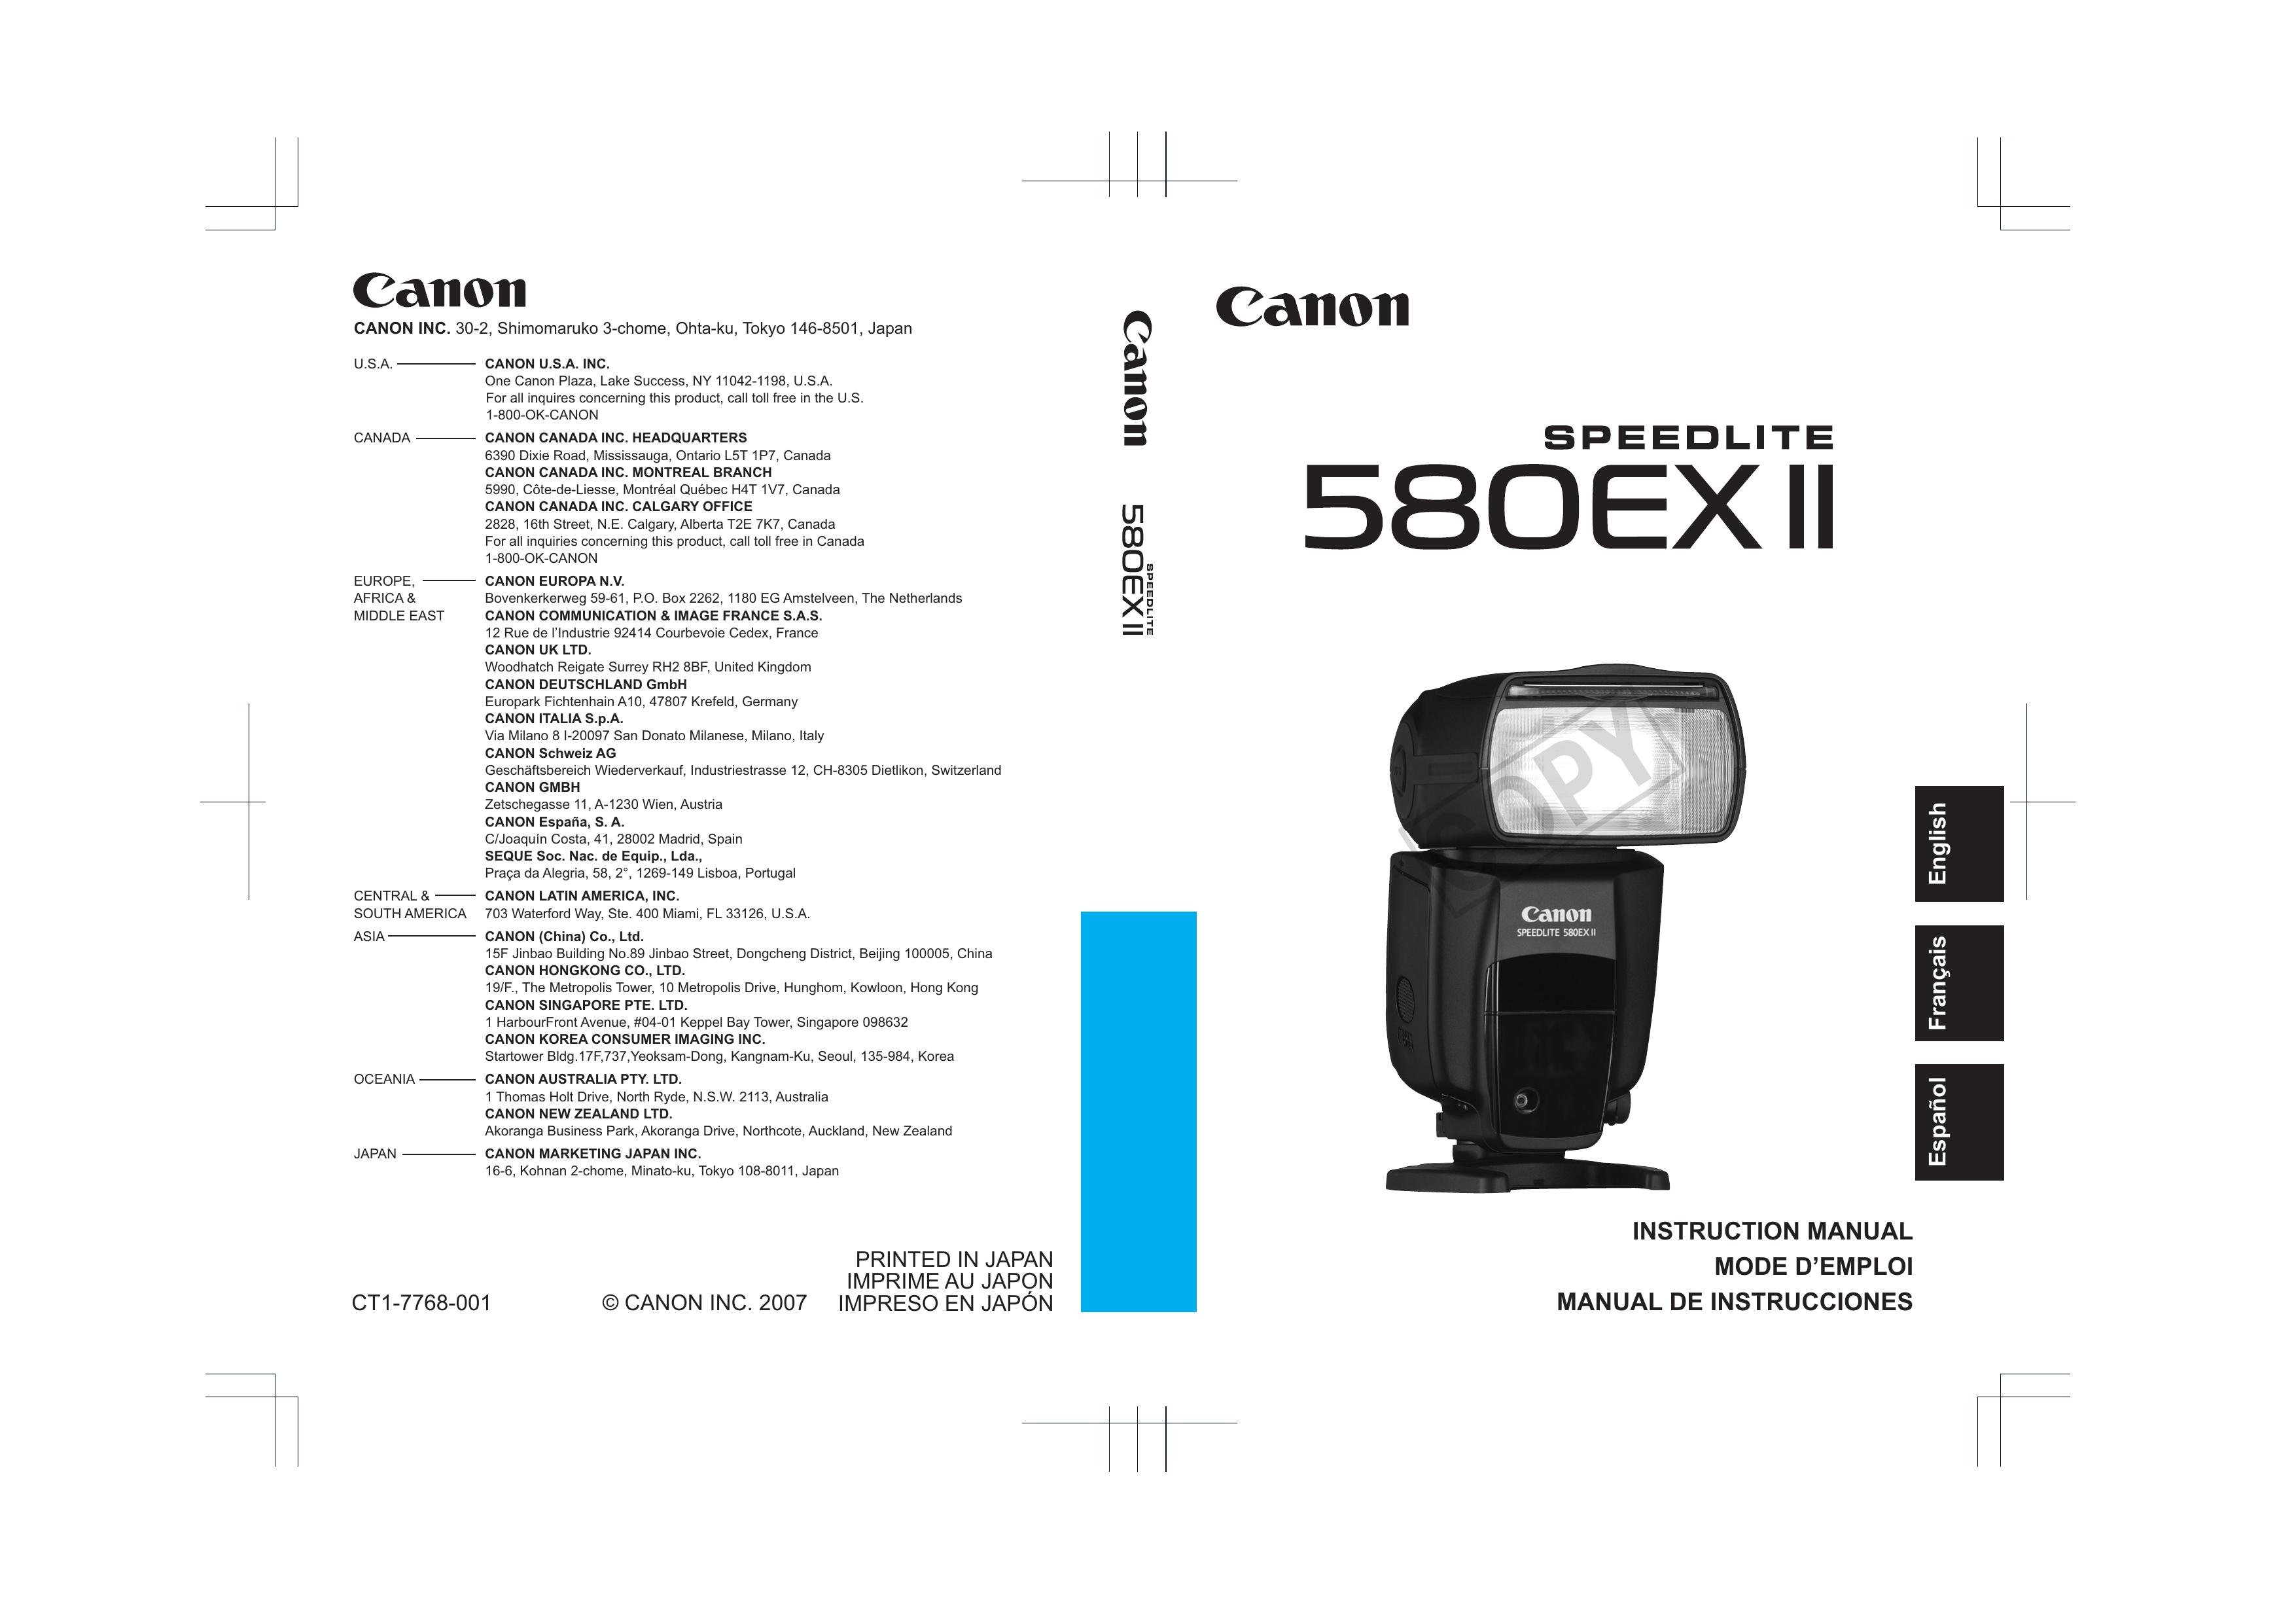 Canon 580EX II Camera Flash User Manual